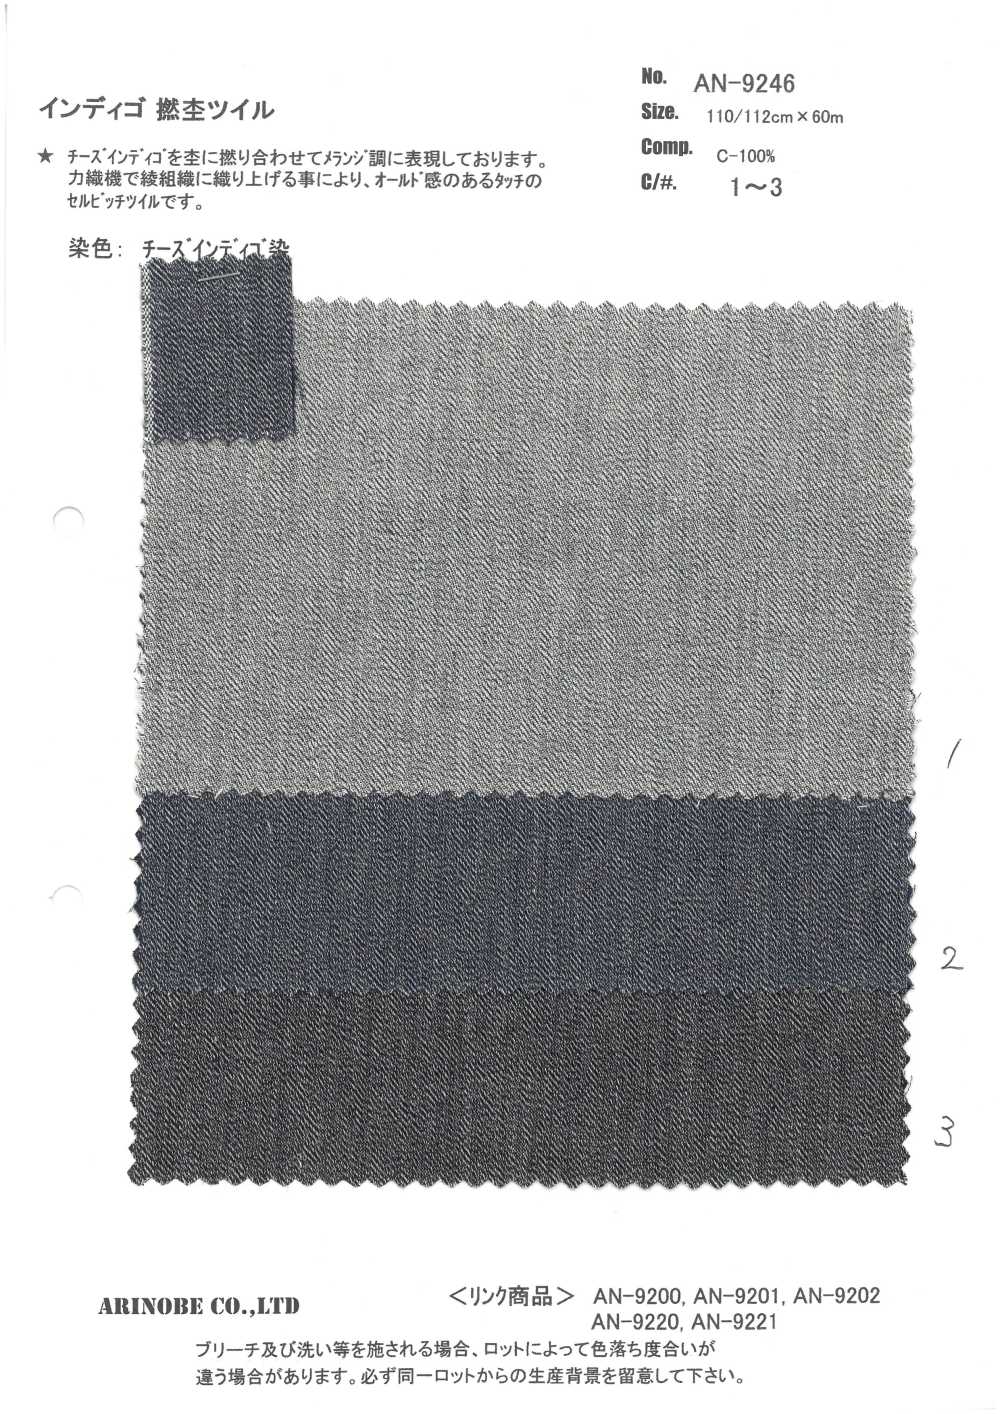 AN-9246 Indigo Twisted Twill[Textile / Fabric] ARINOBE CO., LTD.